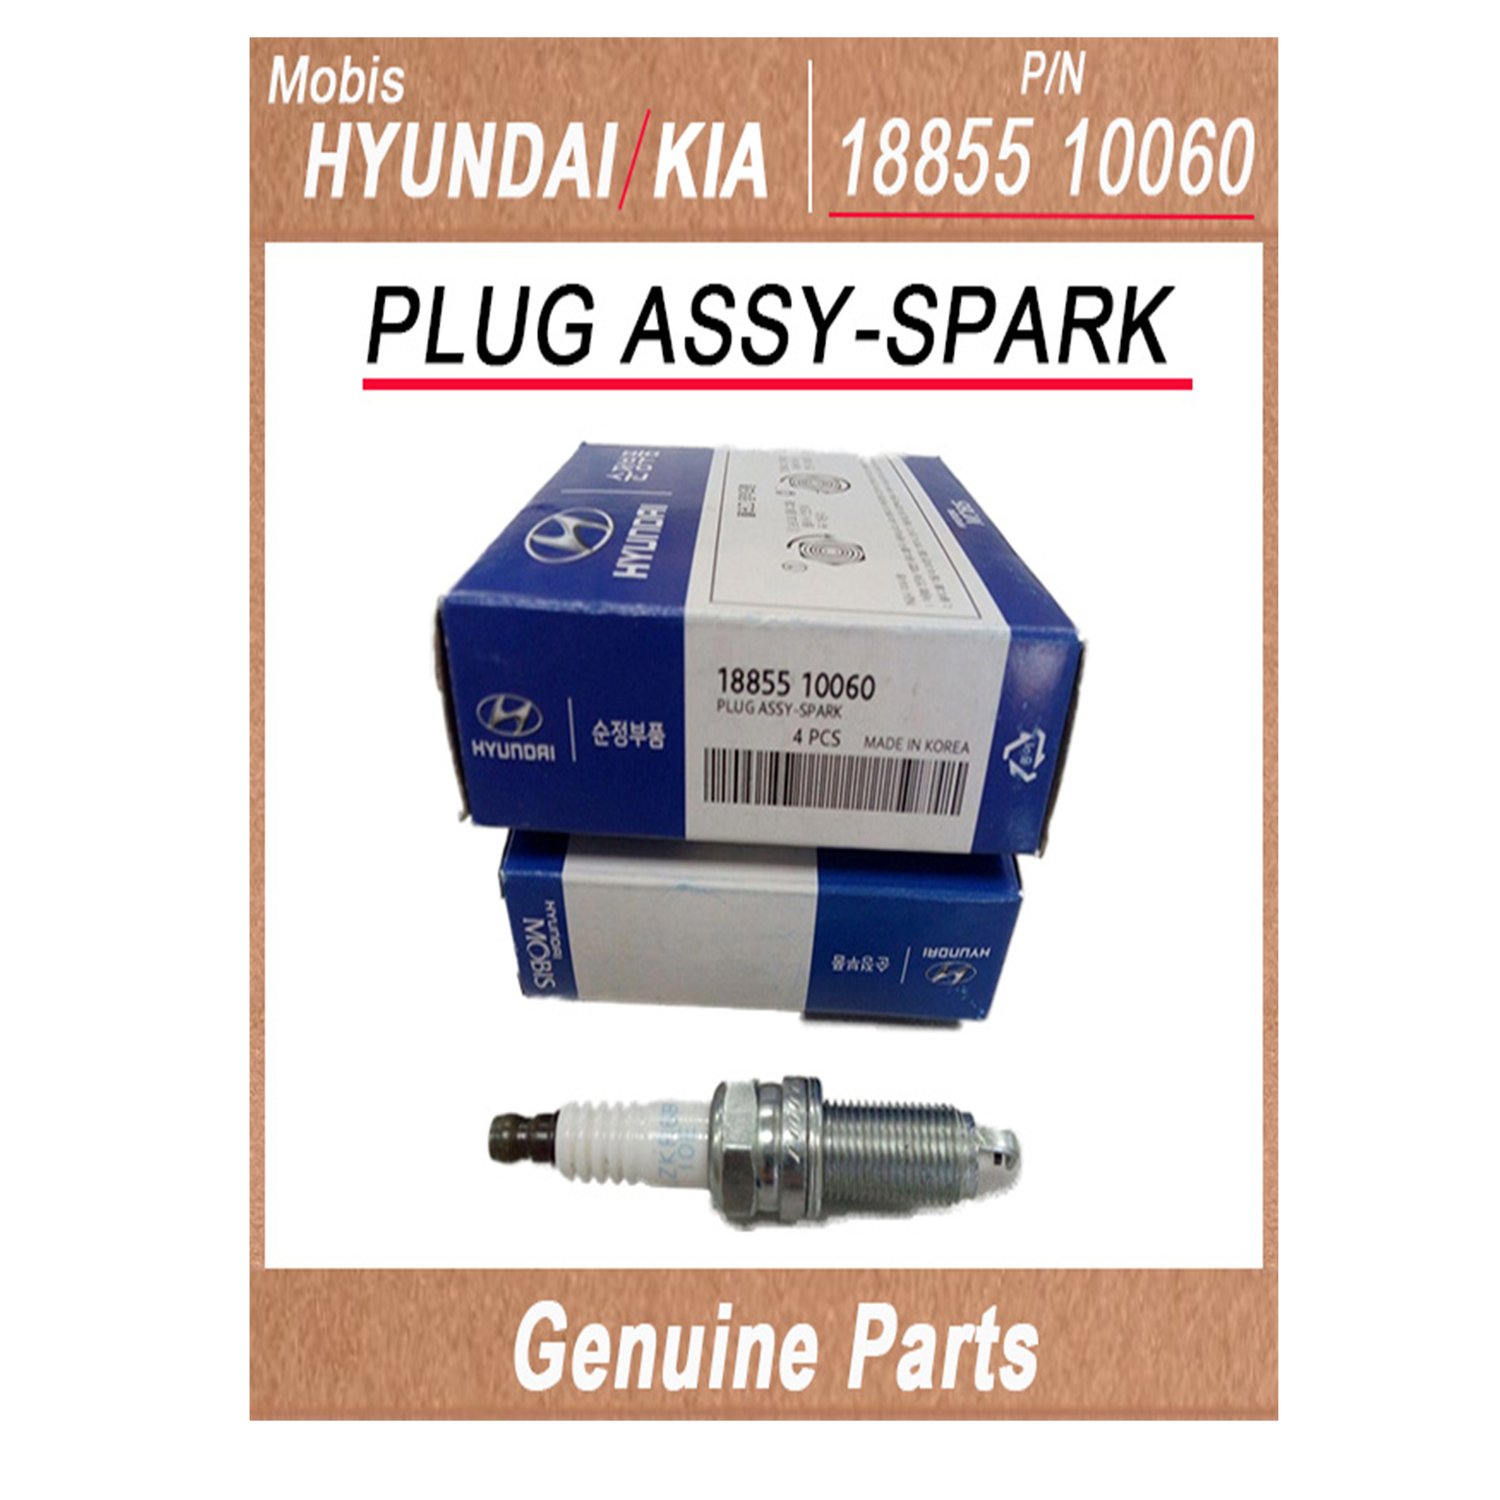 1885510060 _ PLUG ASSY_SPARK _ Genuine Korean Automotive Spare Parts _ Hyundai Kia _Mobis_